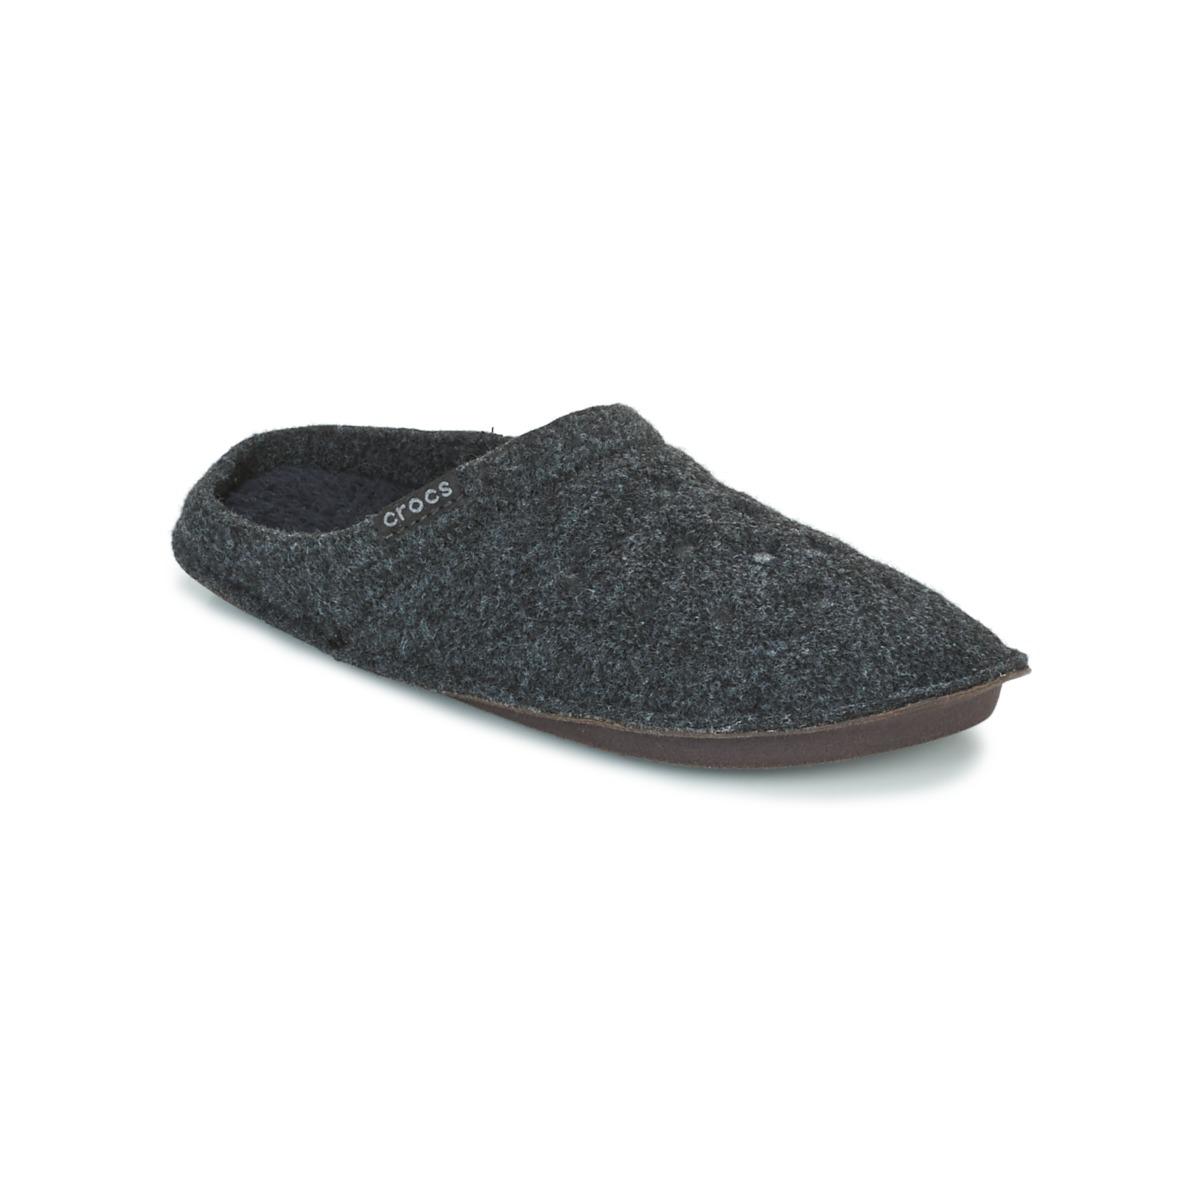 crocs men's classic slippers